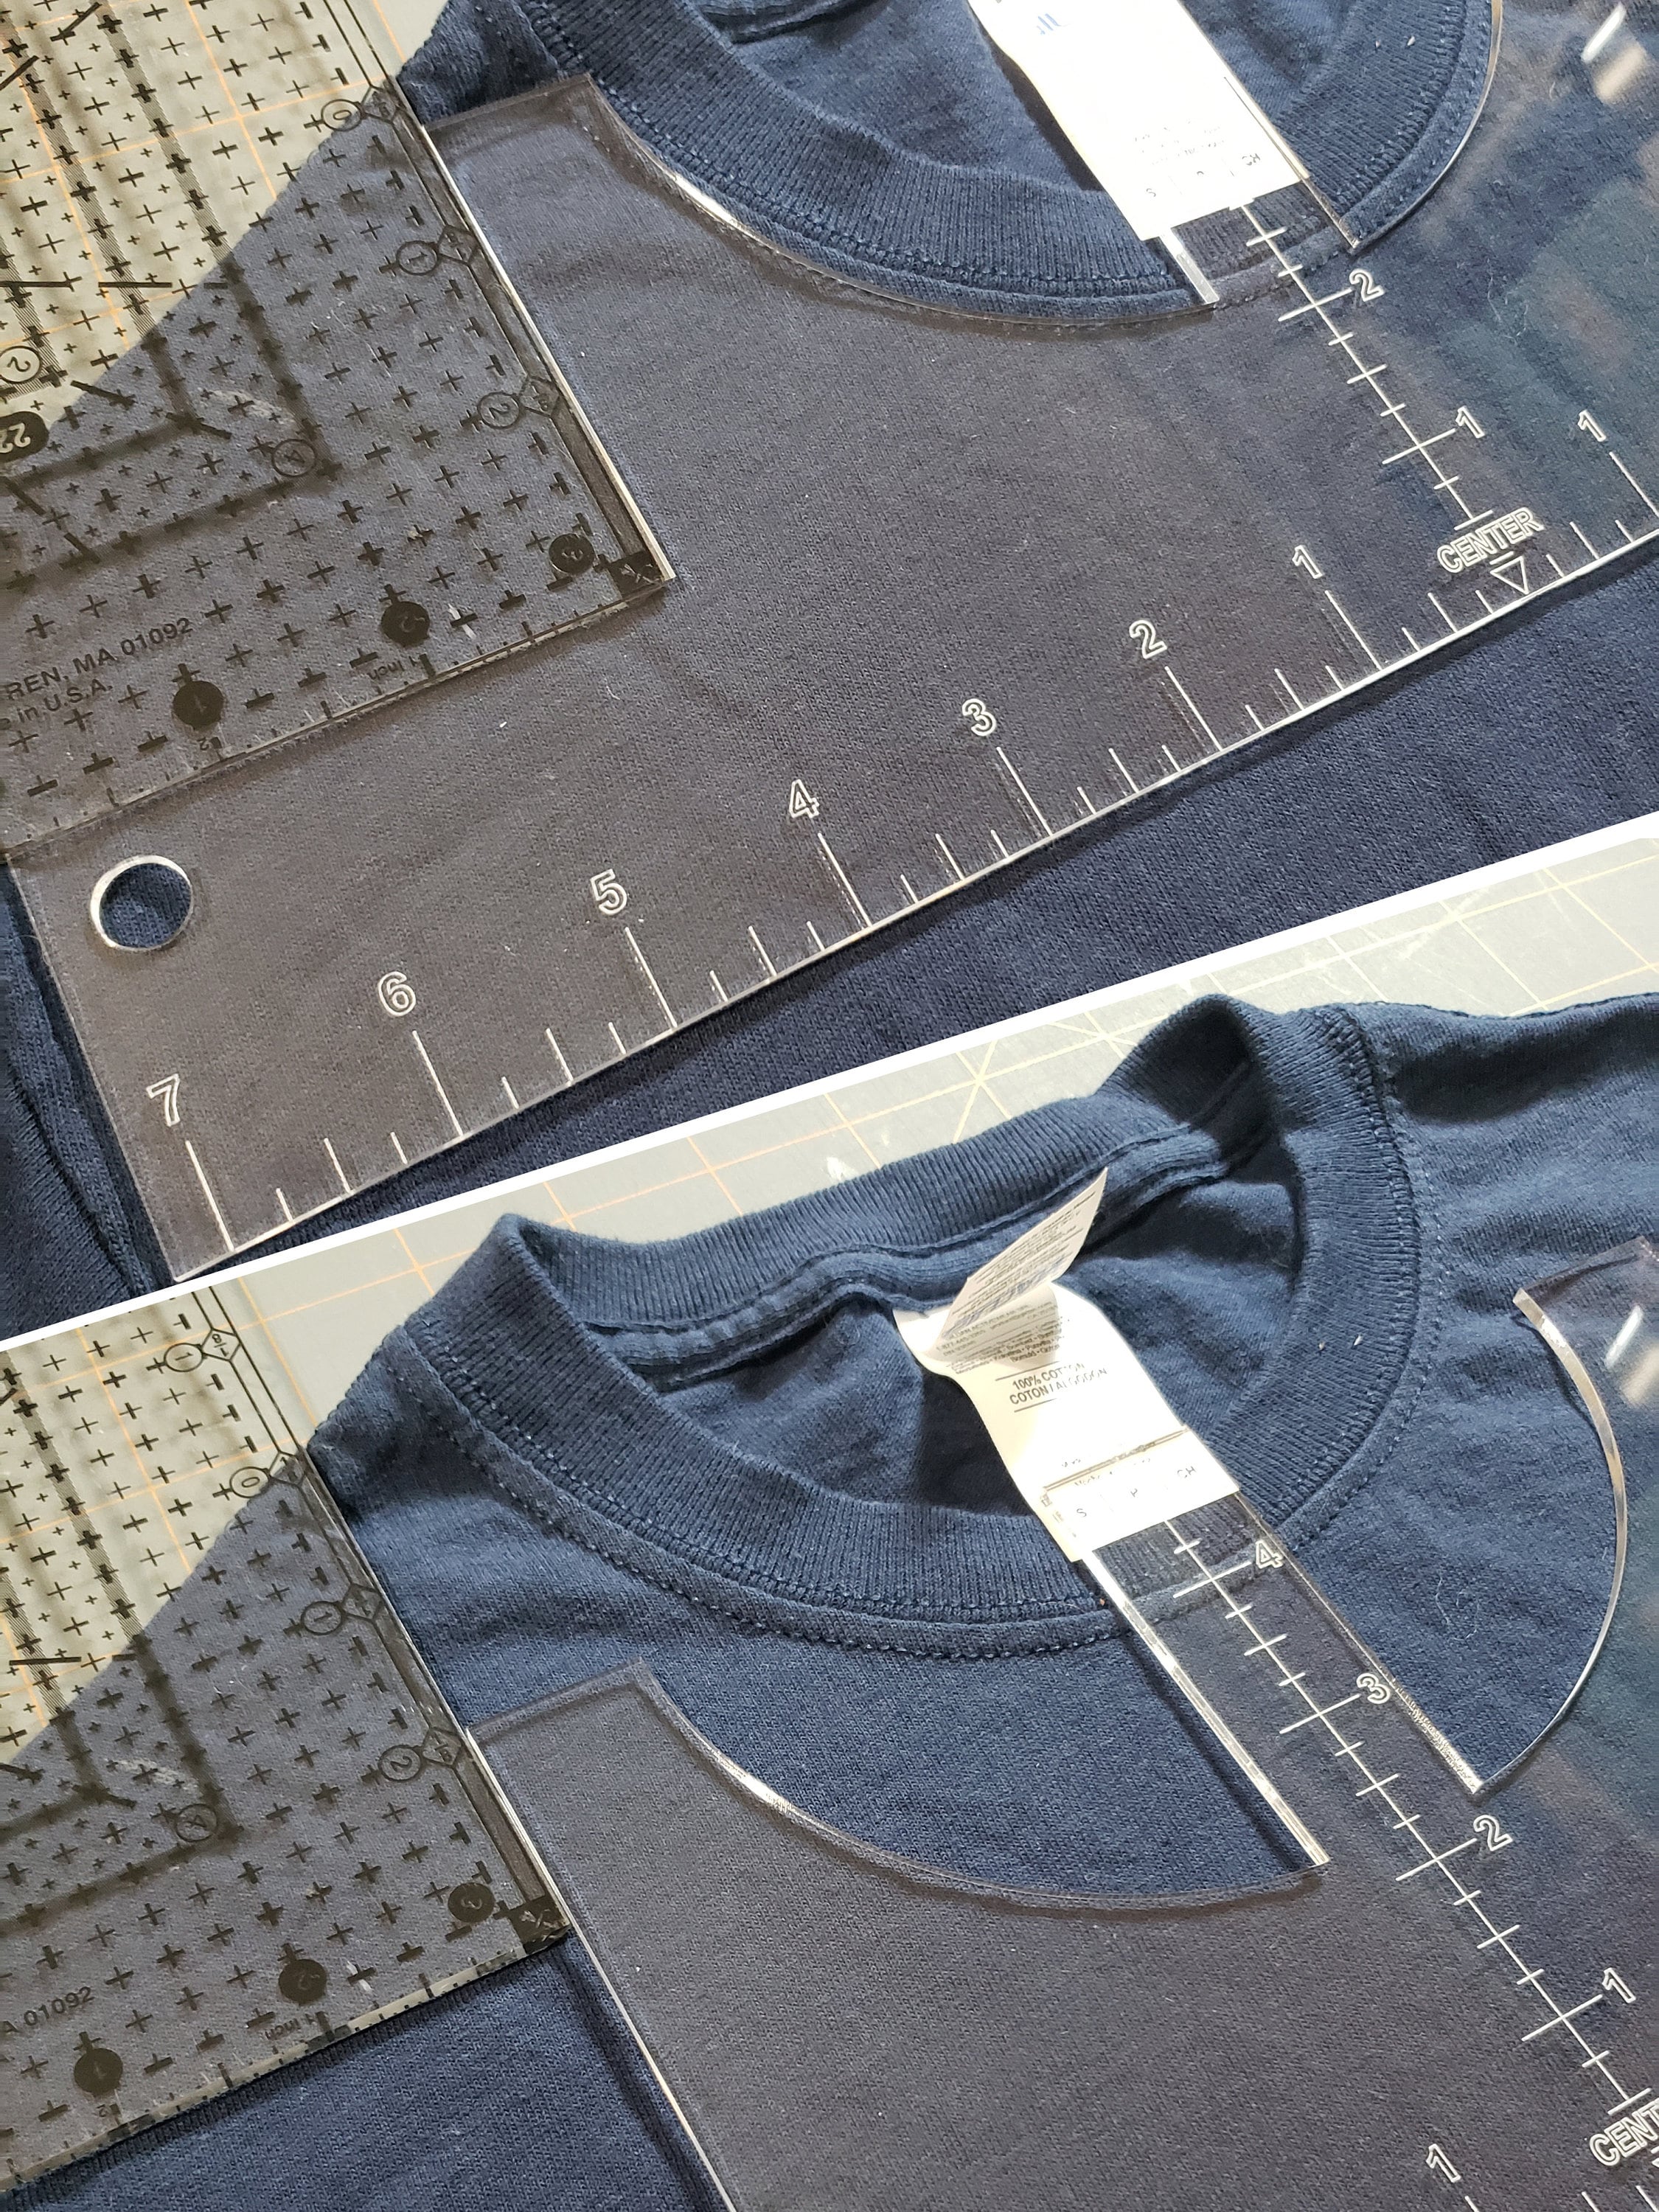 T-Shirt Alignment Guide Tee Shirt Ruler Heat Transfer HTV | Etsy